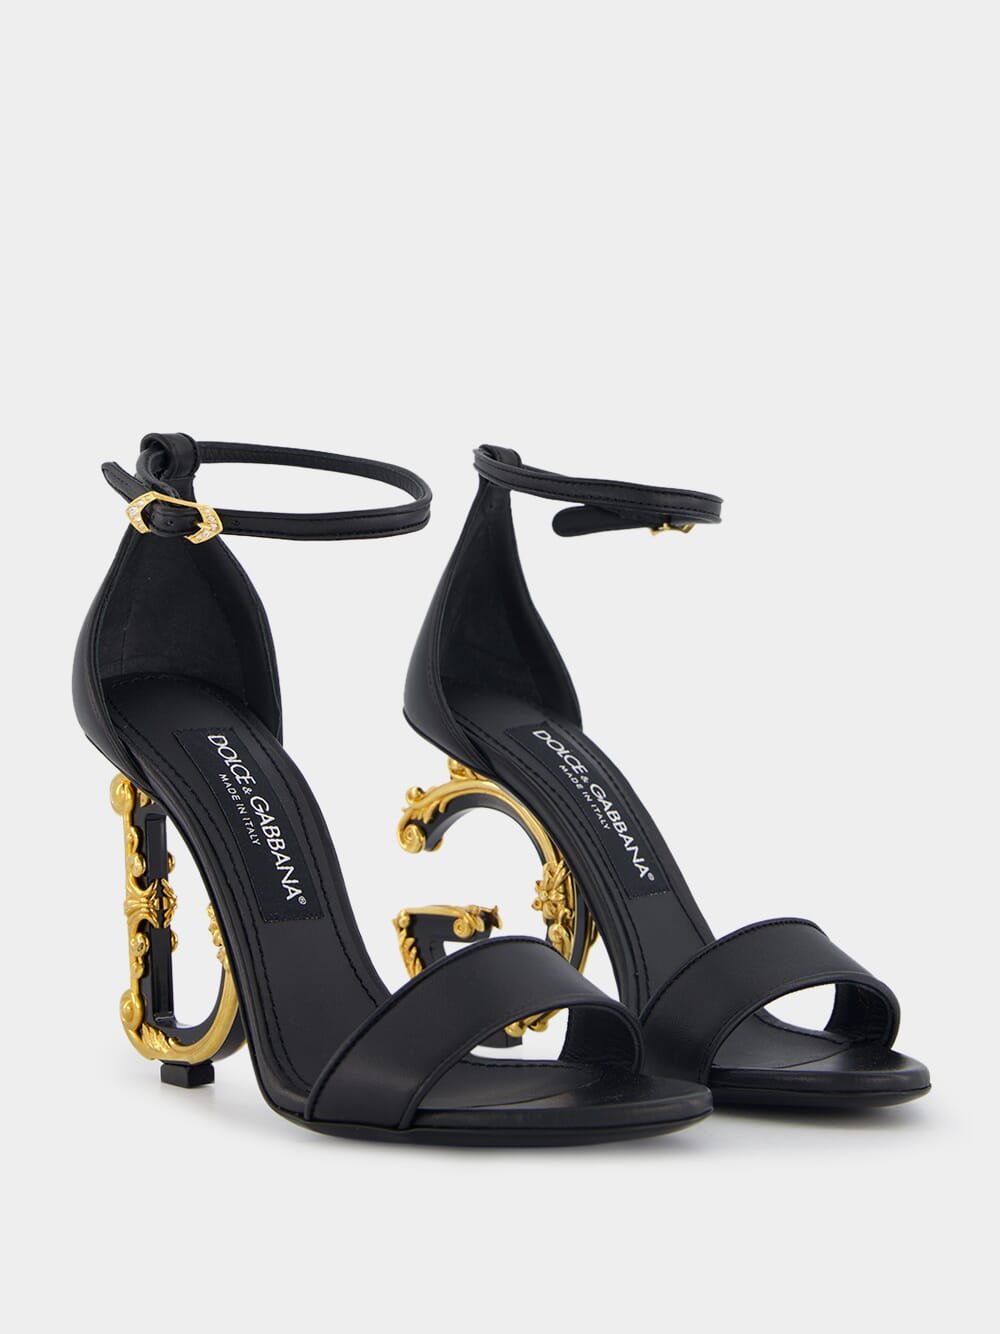 Dolce & GabbanaKeira Baroque Logo 105mm Sandals at Fashion Clinic